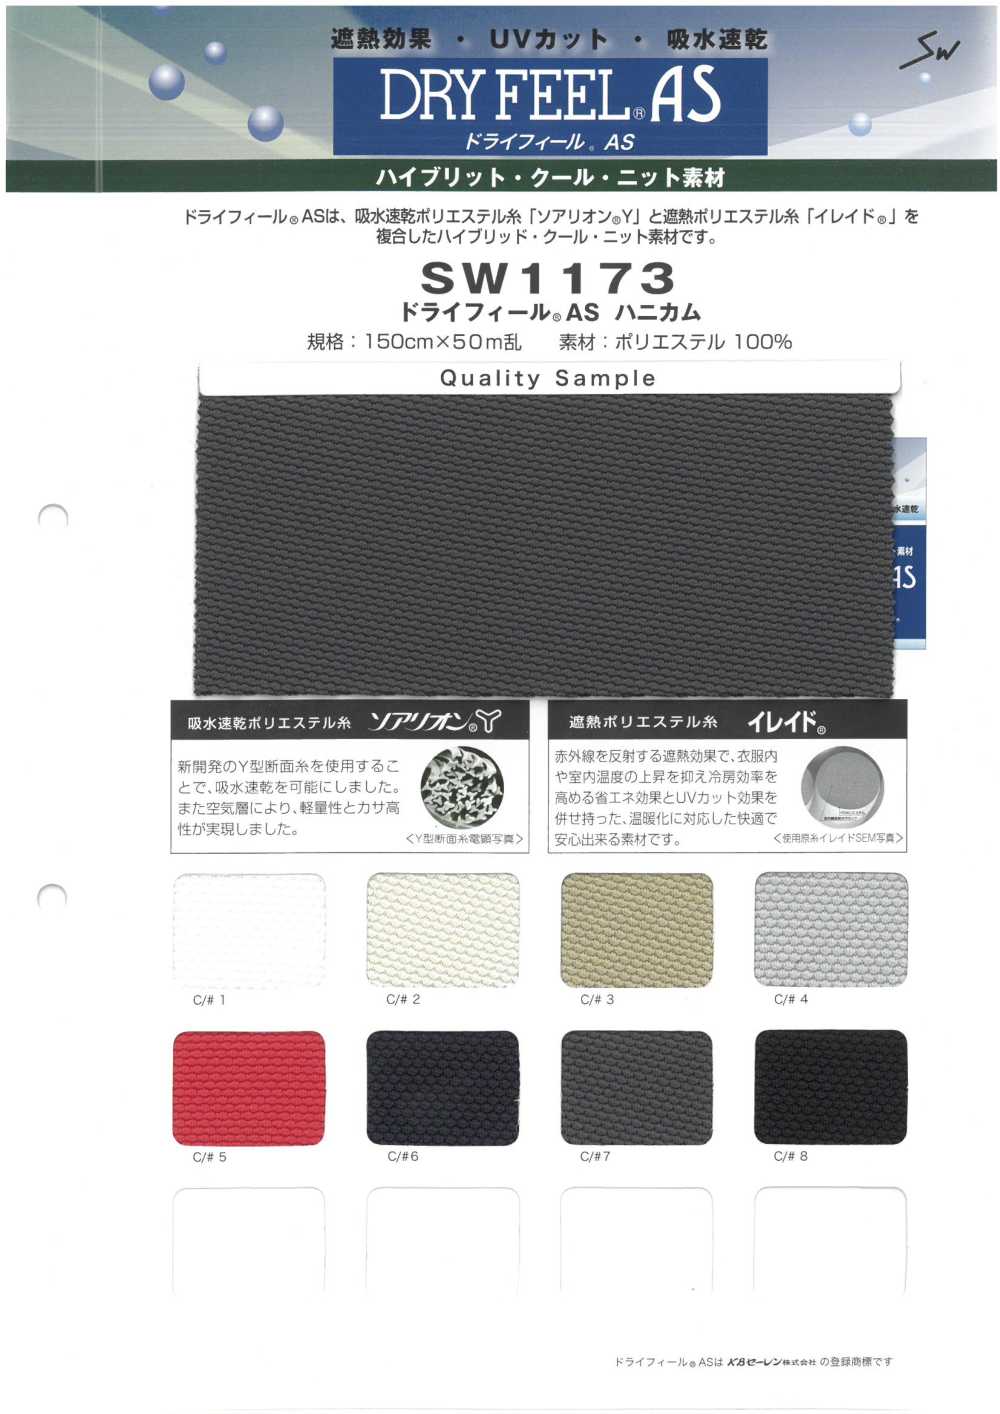 SW1173 Dry Feel AS Moss Stitch[Textile / Fabric] Sanwa Fibers